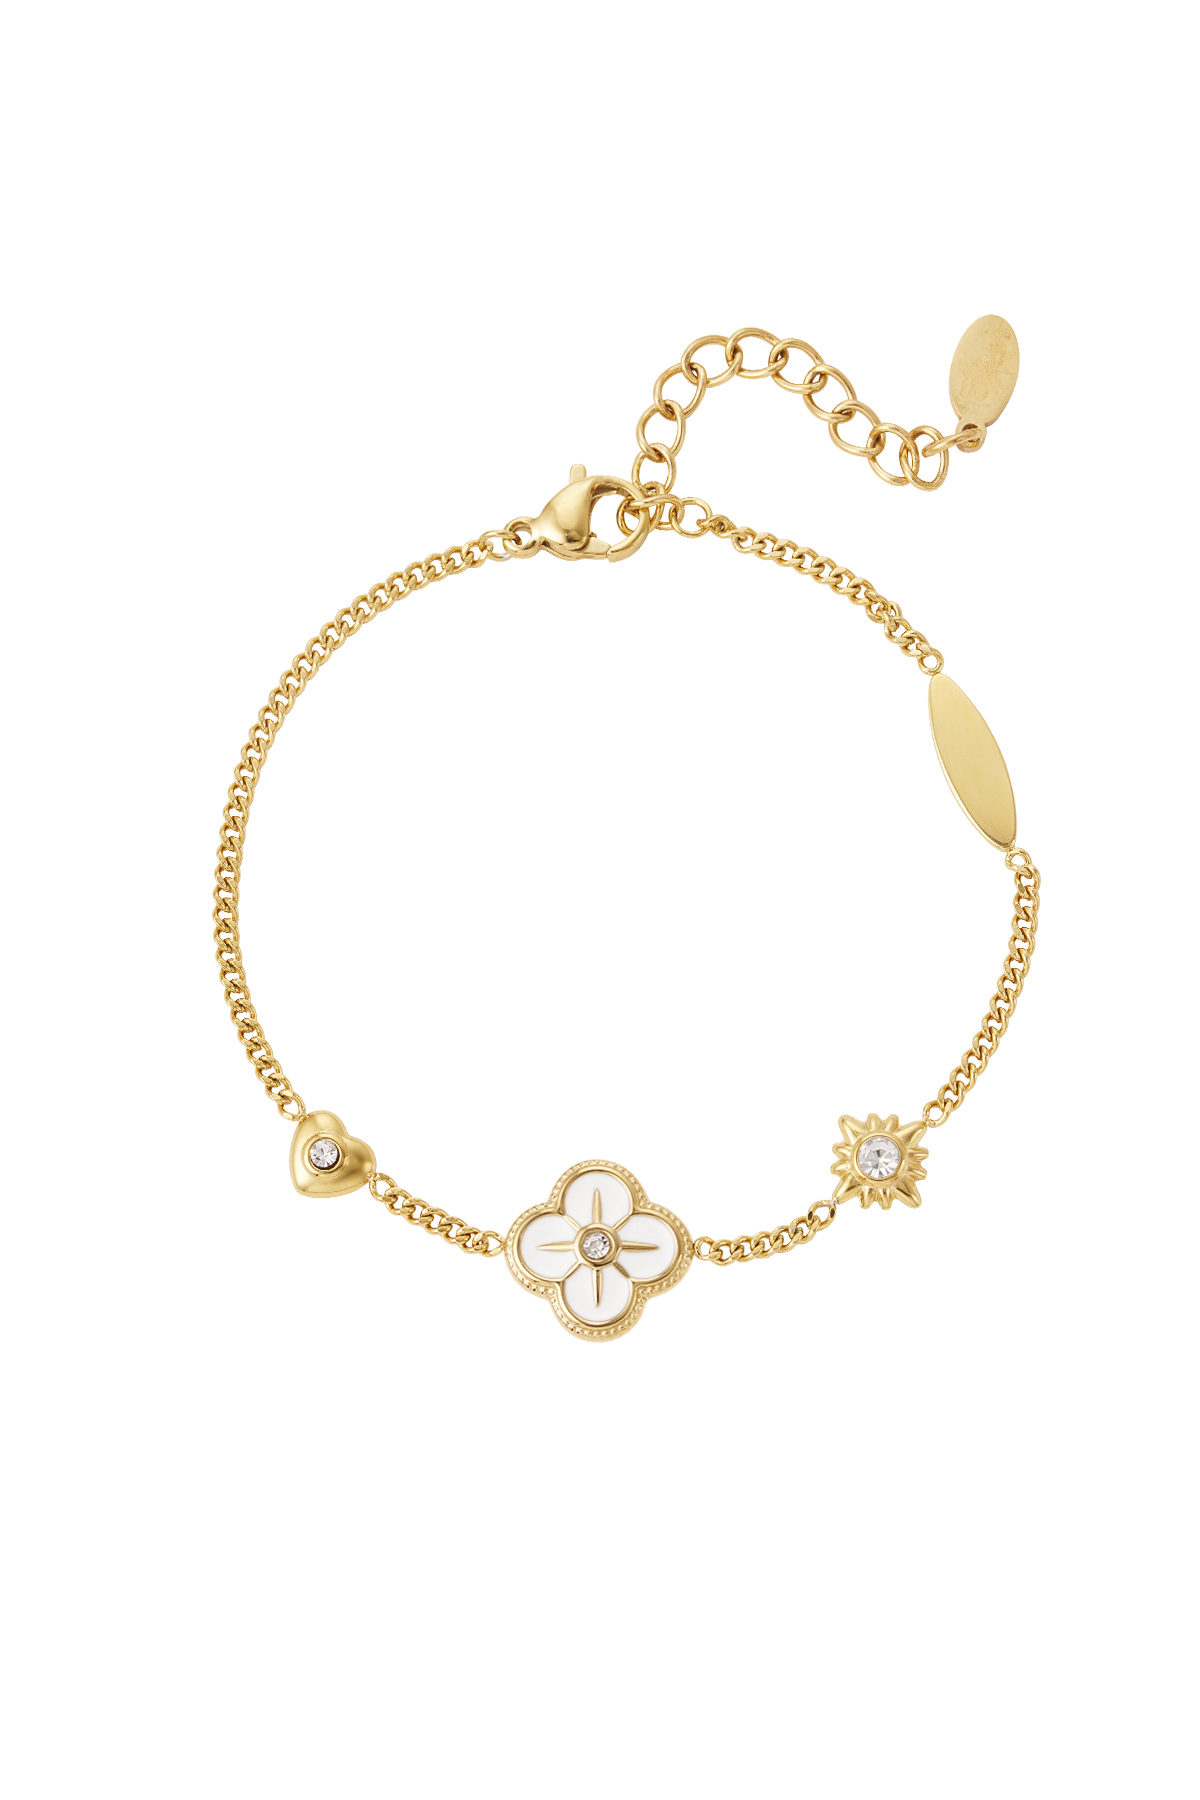 Bracelet charms white details - gold